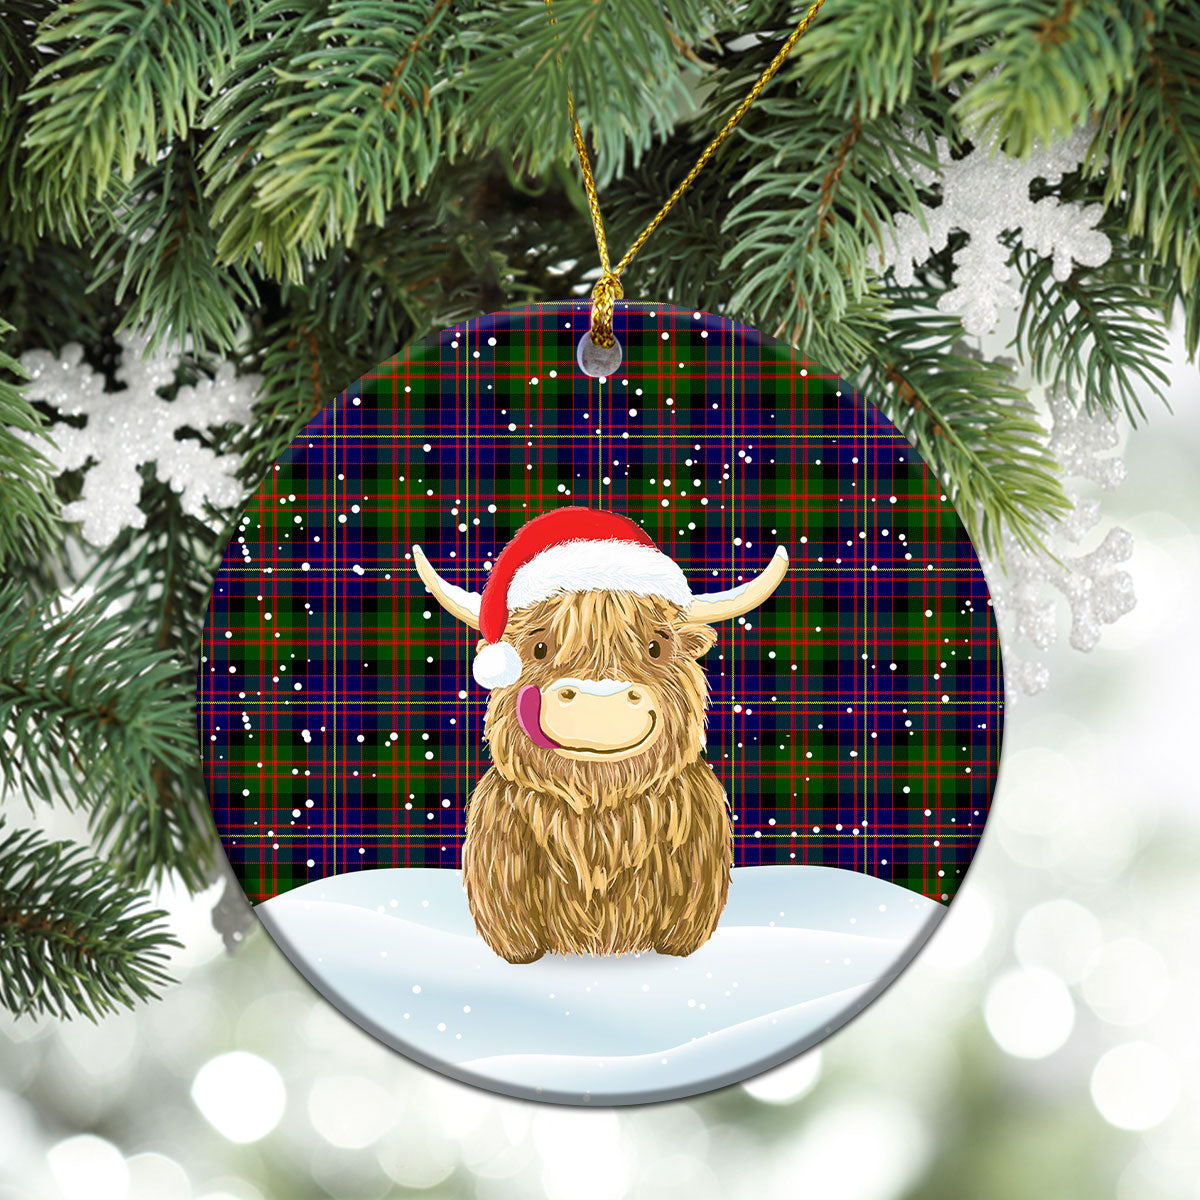 Chalmers (Balnacraig) Tartan Christmas Ceramic Ornament - Highland Cows Style